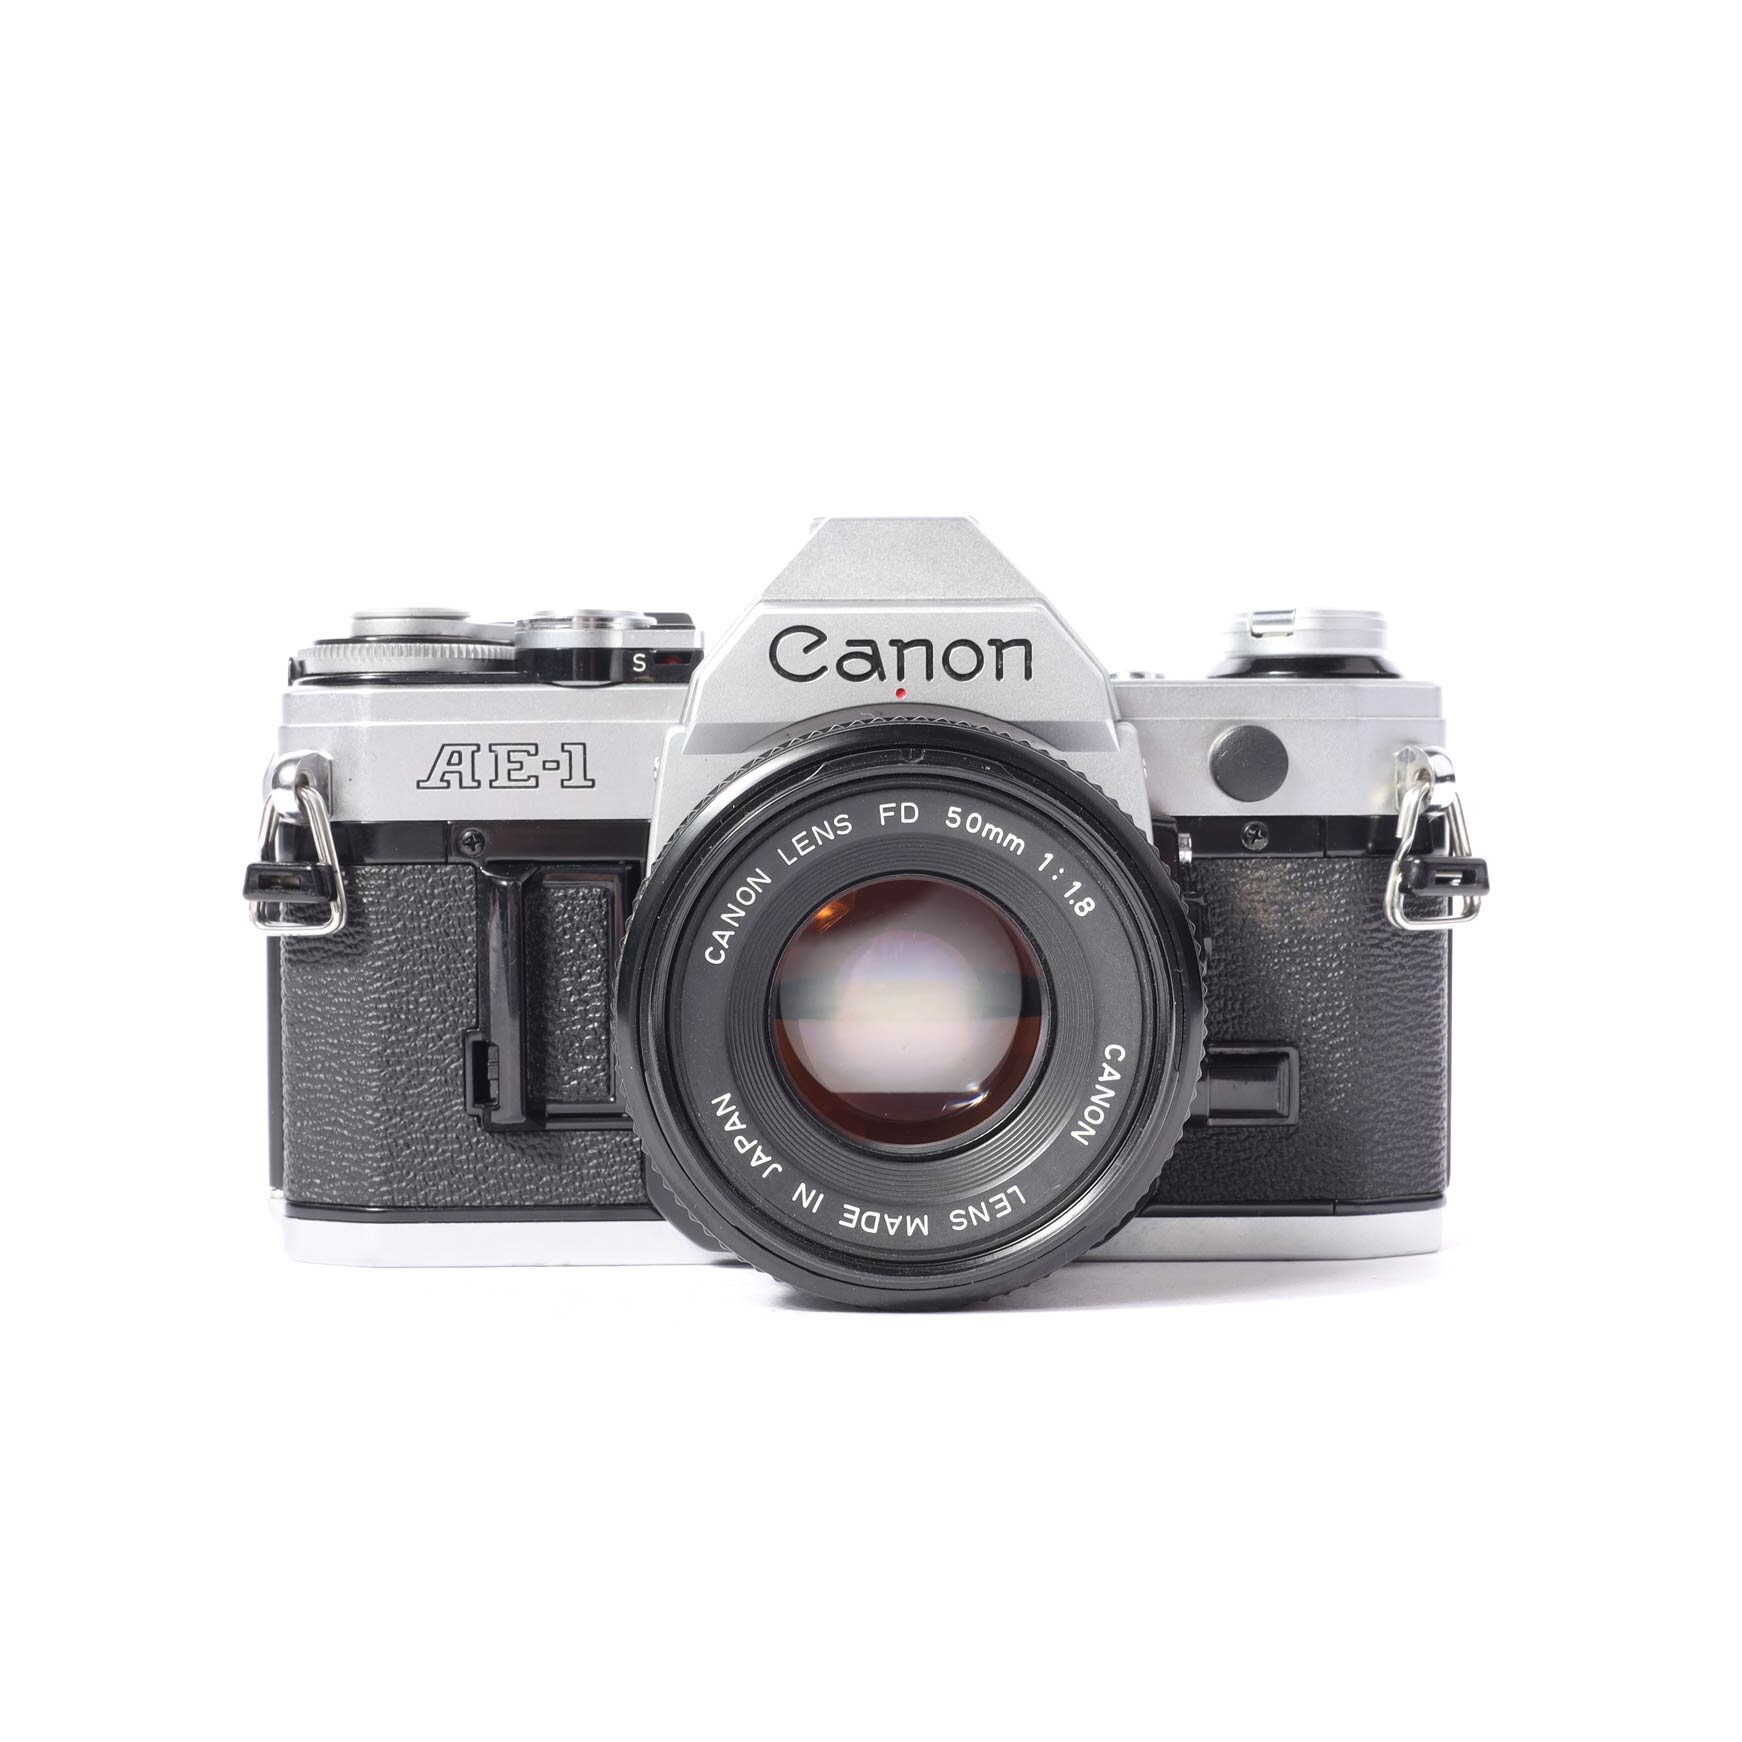 Canon AE-1 FD 50/1,8 mm